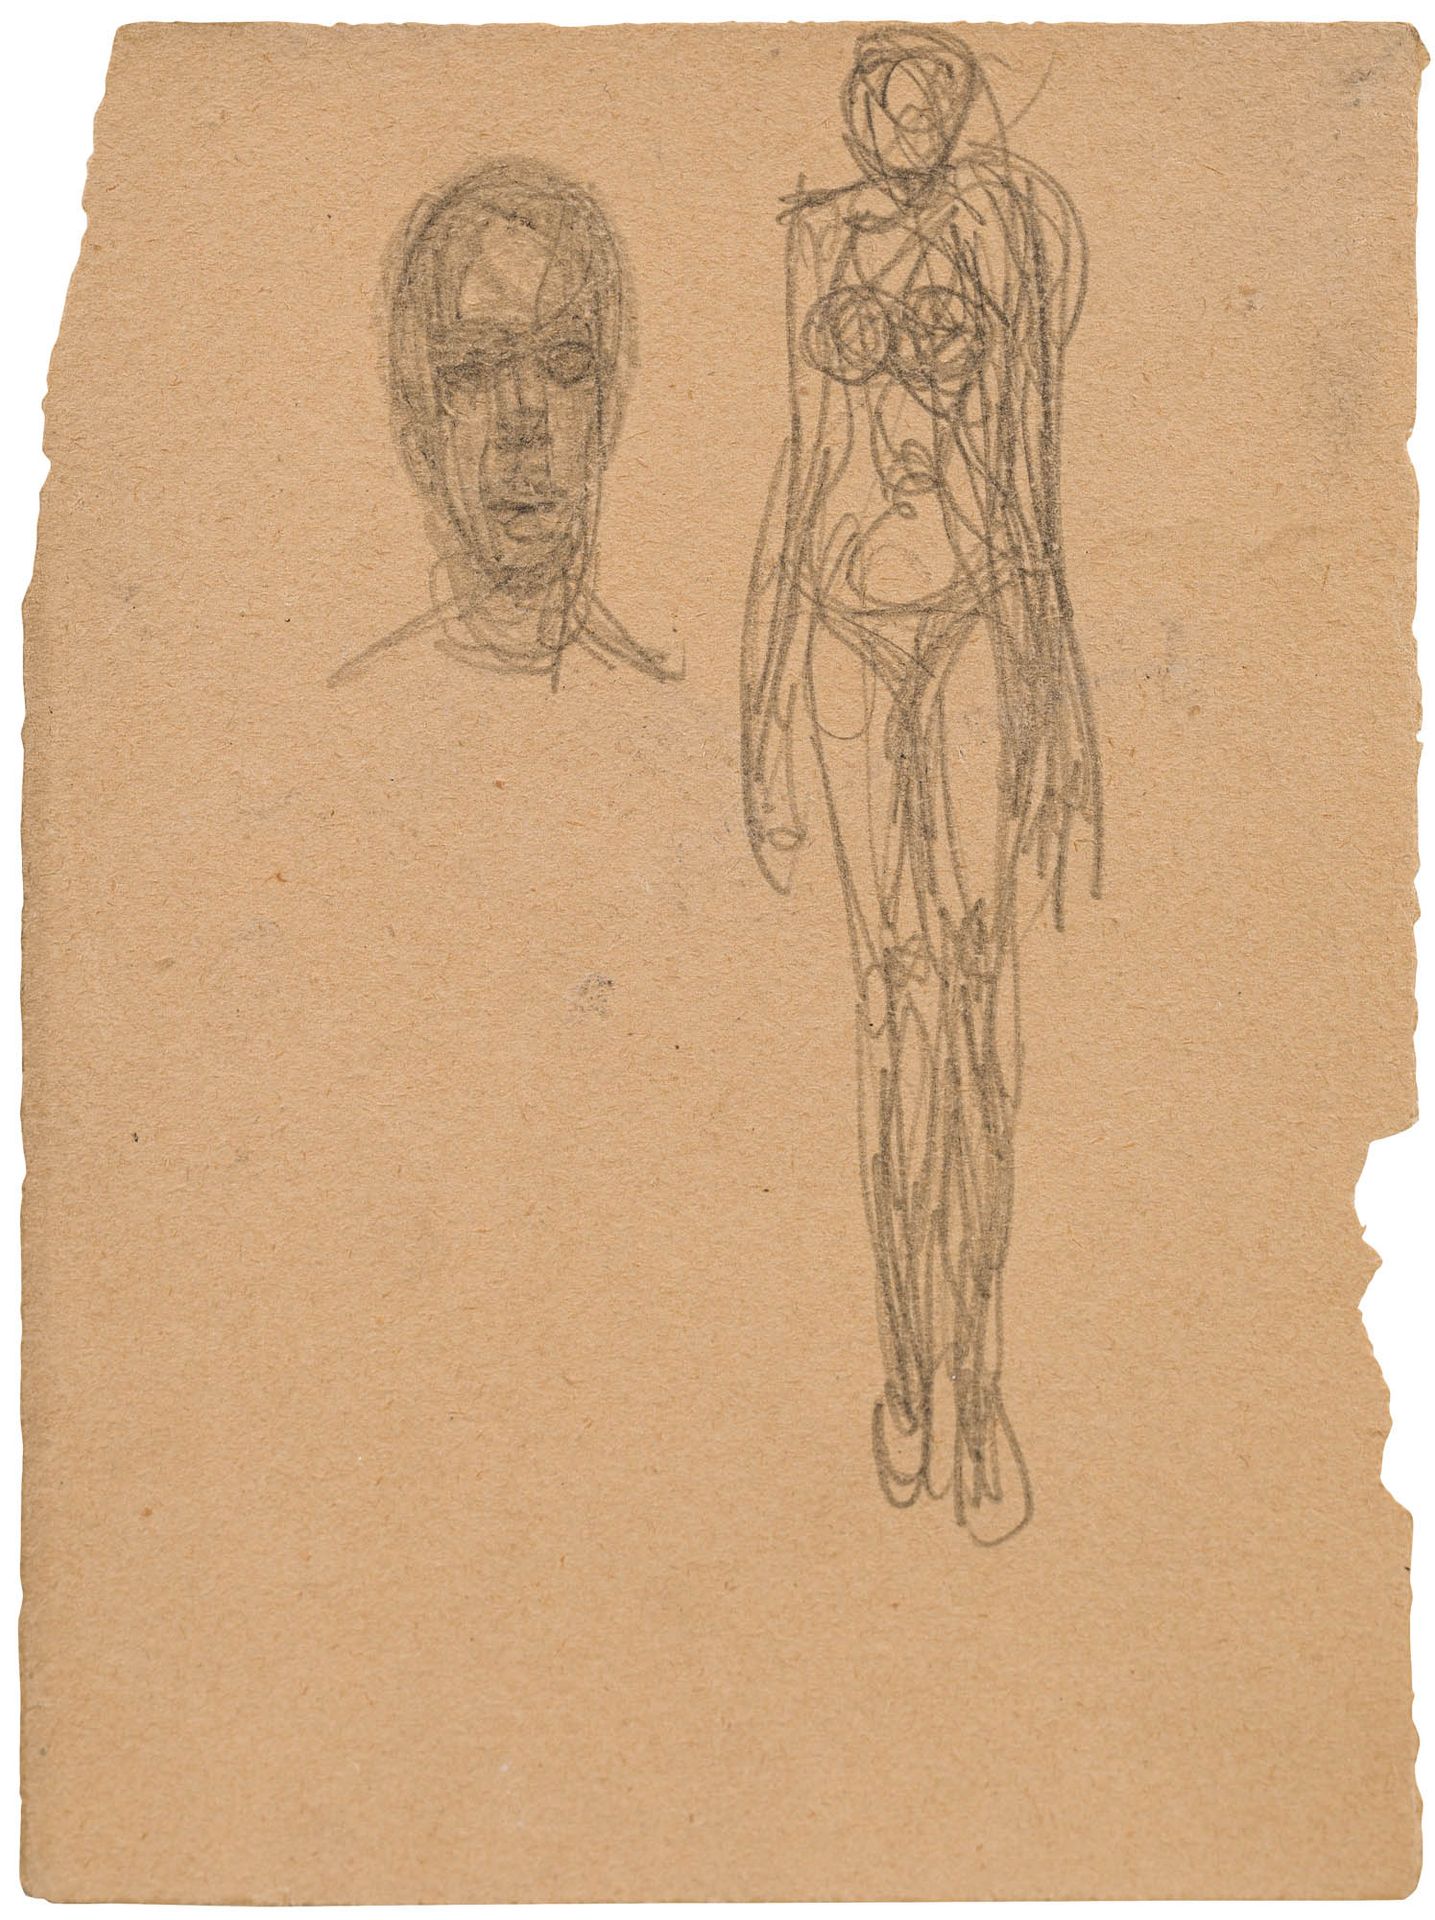 Alberto Giacometti 1901–1966 阿尔贝托-贾科梅蒂 1901-1966

头发和头发都掉光了

纸上铅笔

19,2 x 13,9 c&hellip;